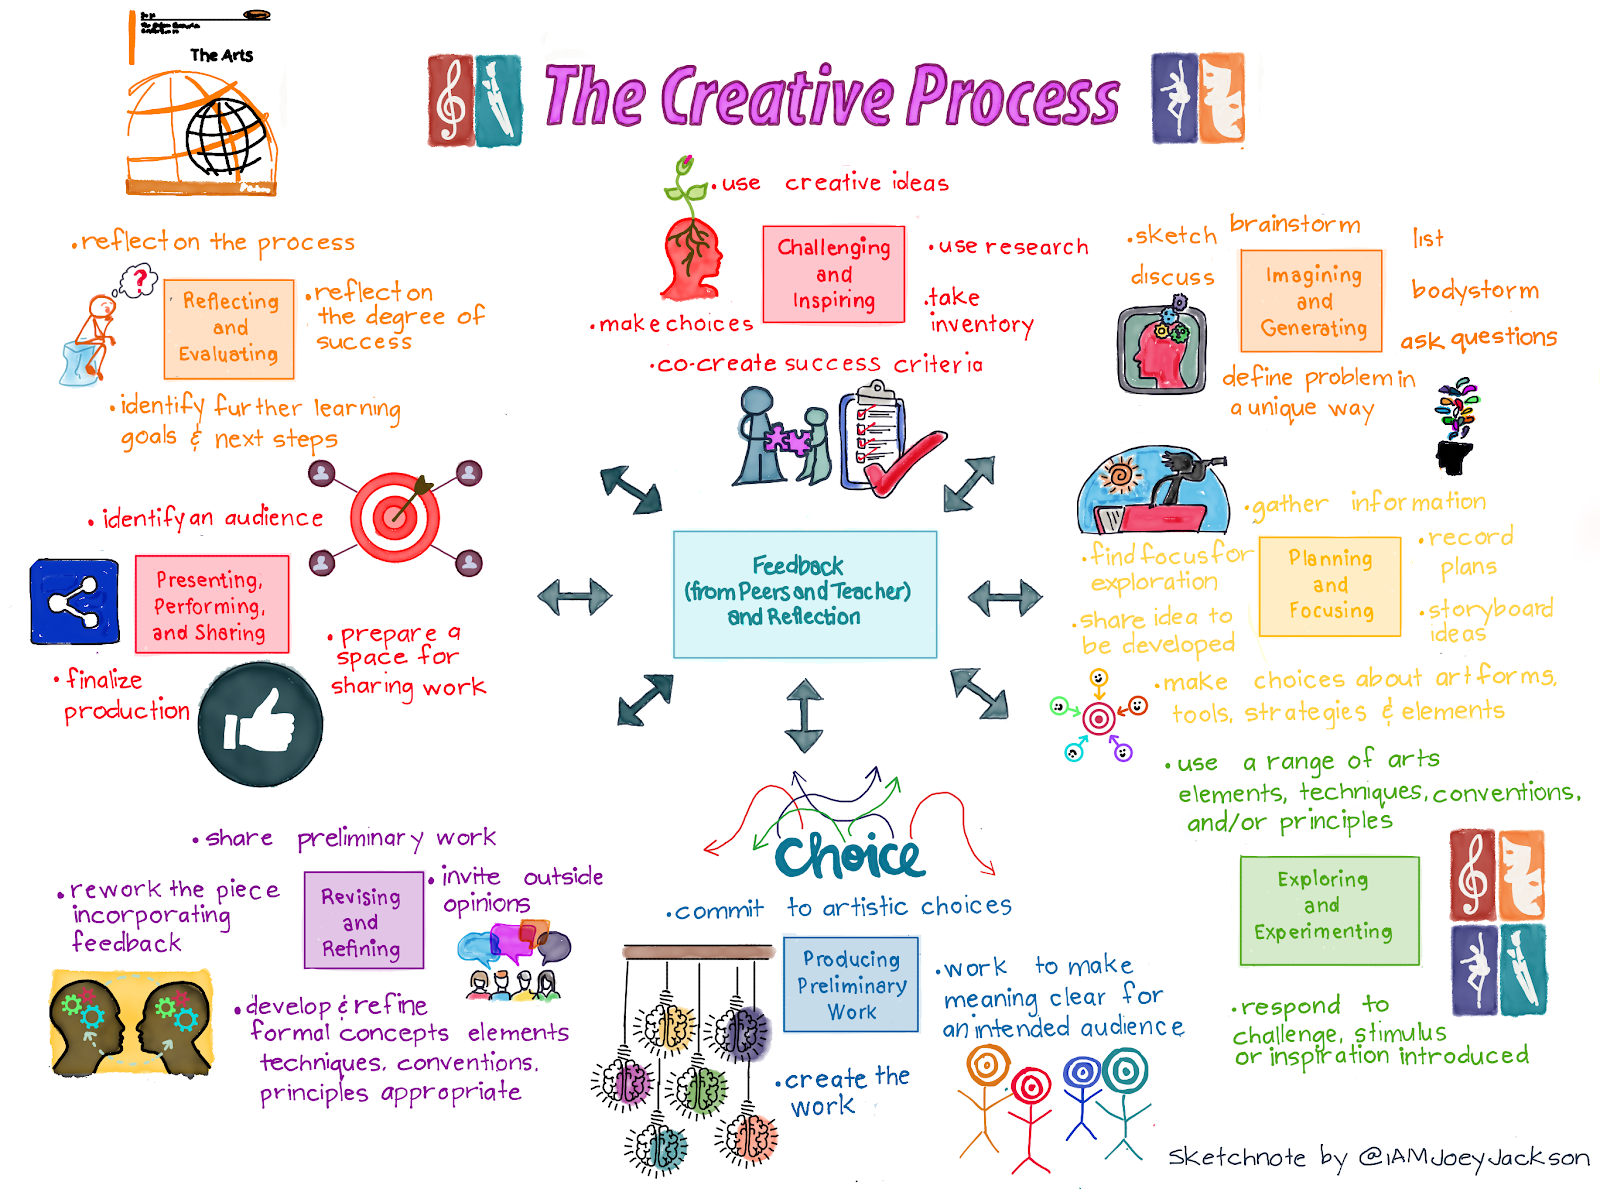 Creative Process #2